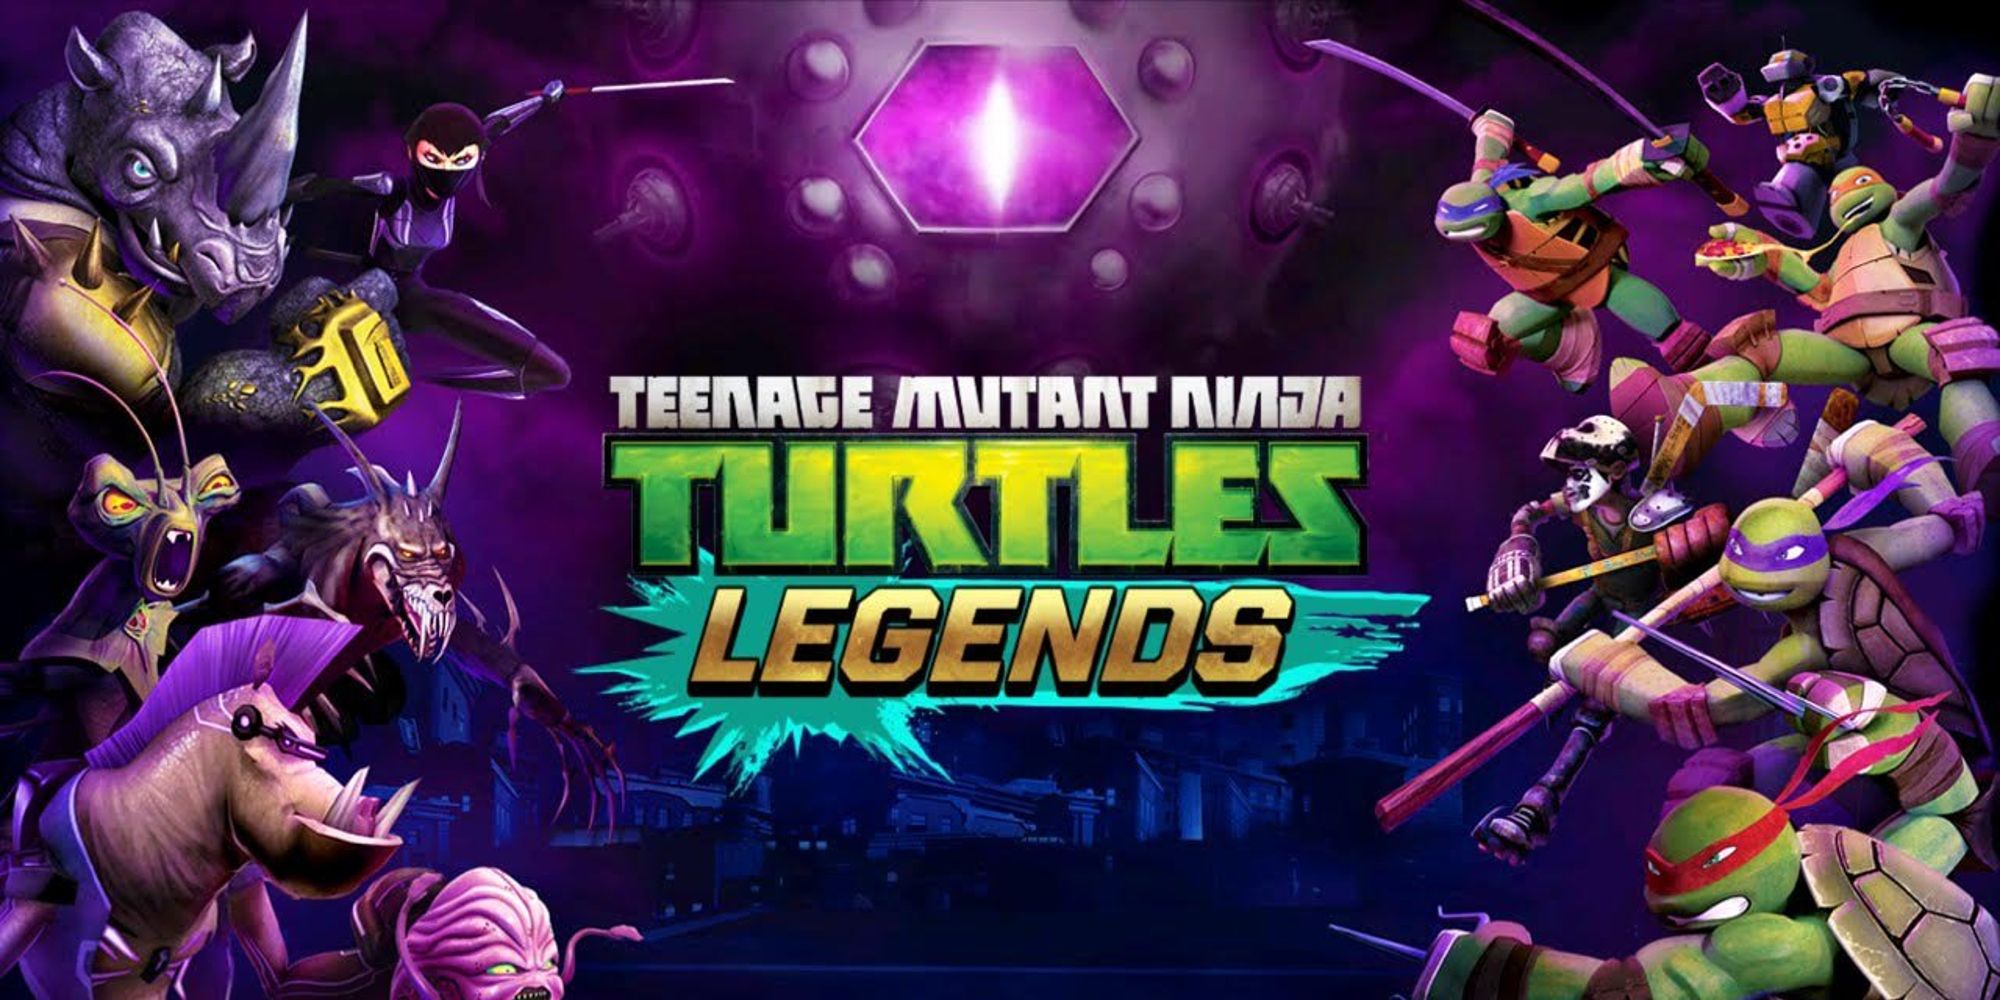 Promotional artwork for Teenage Mutant Ninja Turtles Legends